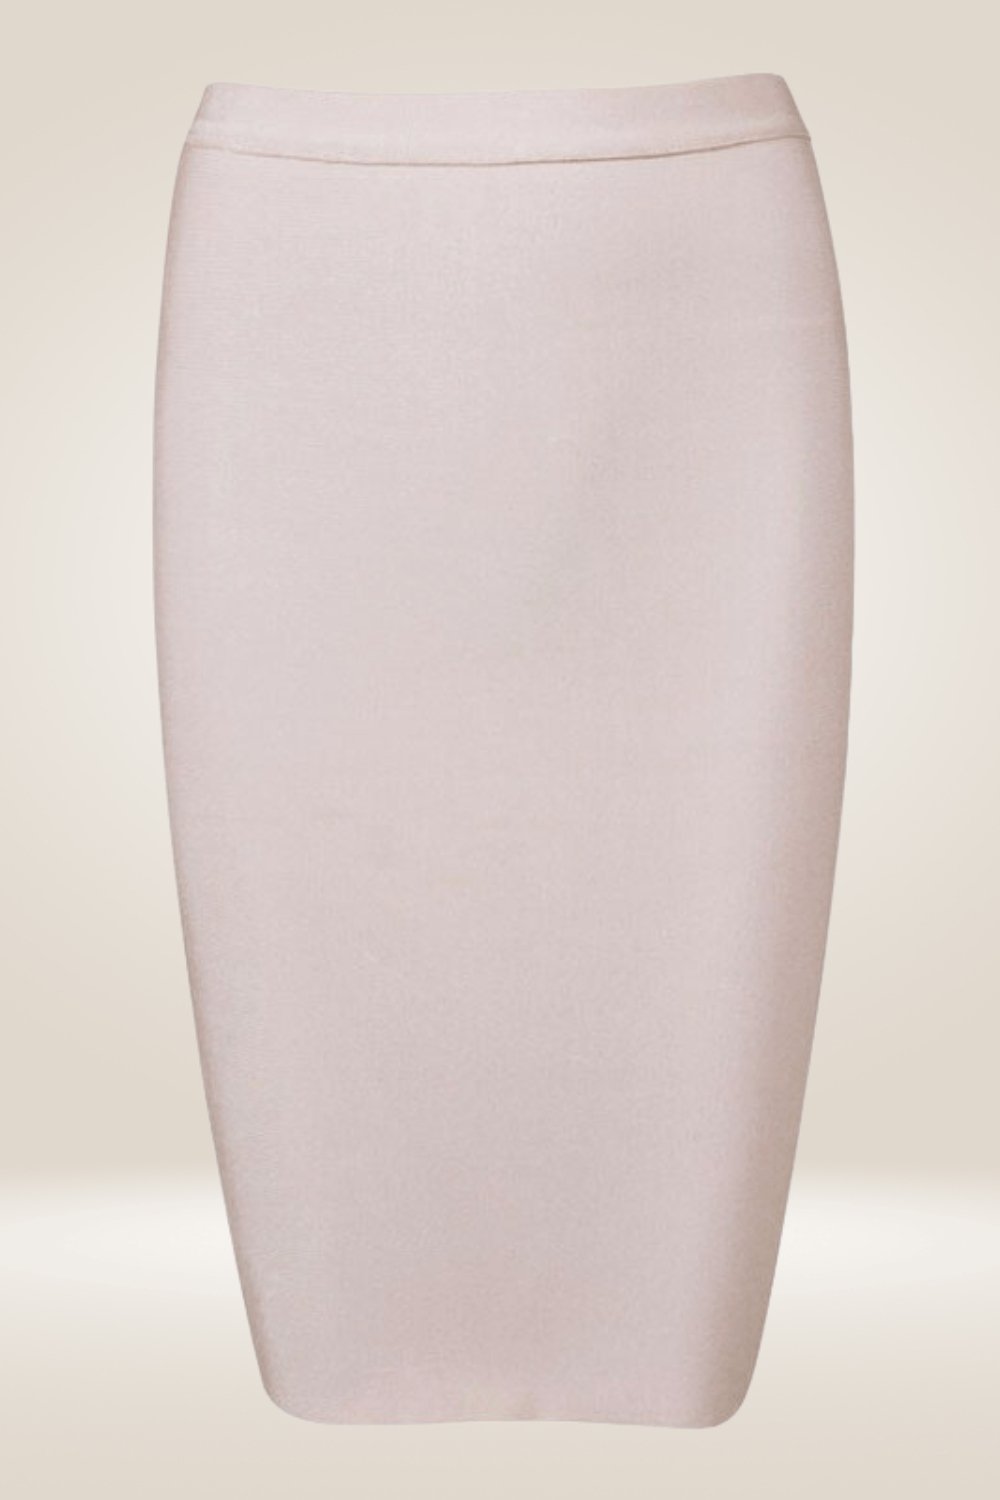 High Waisted Bodycon khaki Skirt - TGC Boutique - Skirt